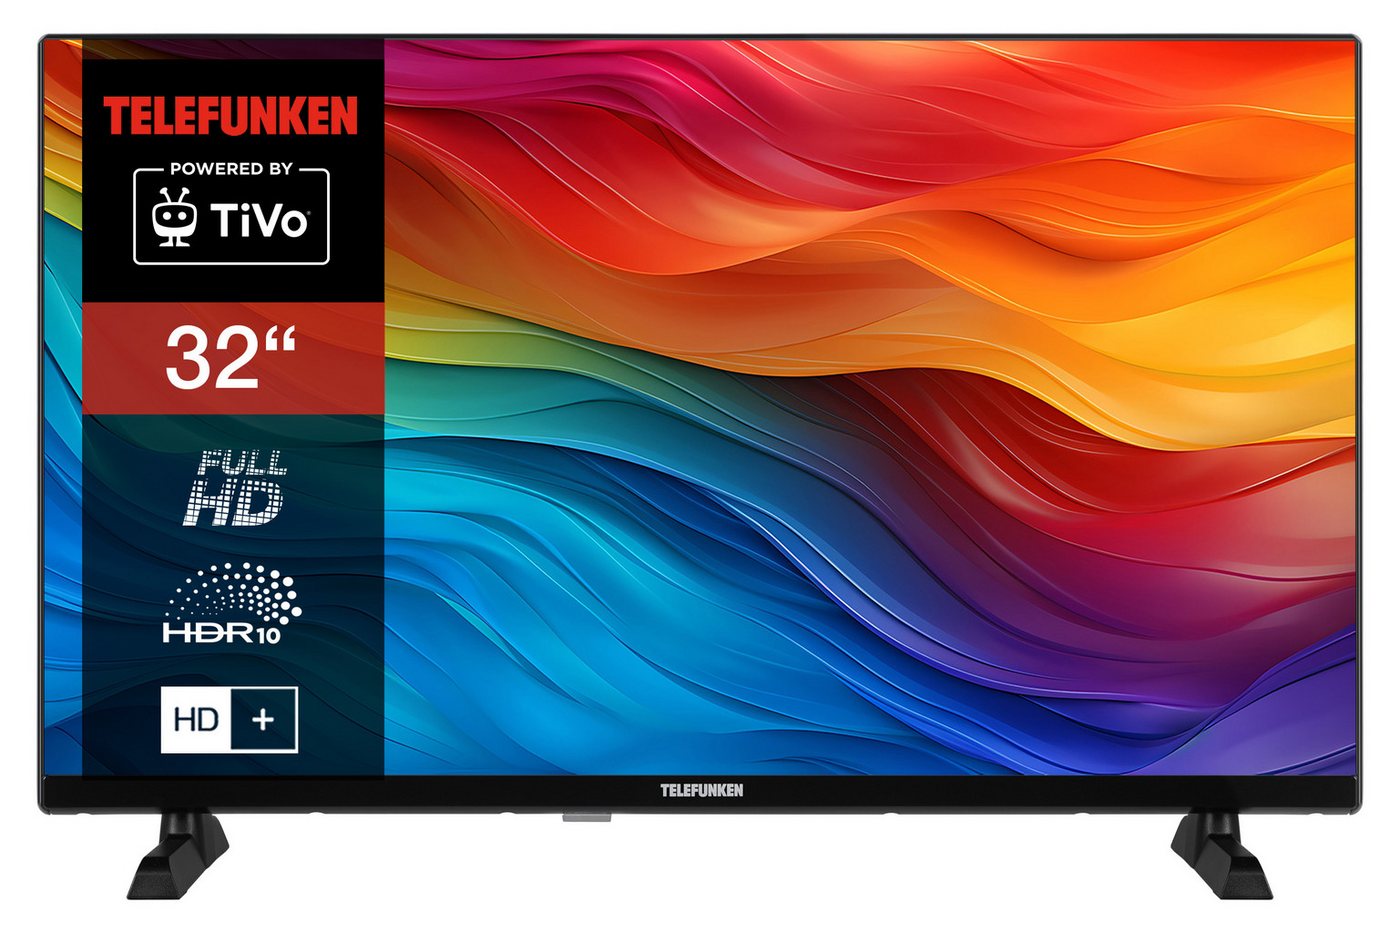 Telefunken XF32TO750S LCD-LED Fernseher (80 cm/32 Zoll, Full HD, TiVo Smart TV, TiVo Smart TV, HDR, Triple-Tuner, Sprachsteuerung, HD+ 6 Monate inkl) von Telefunken